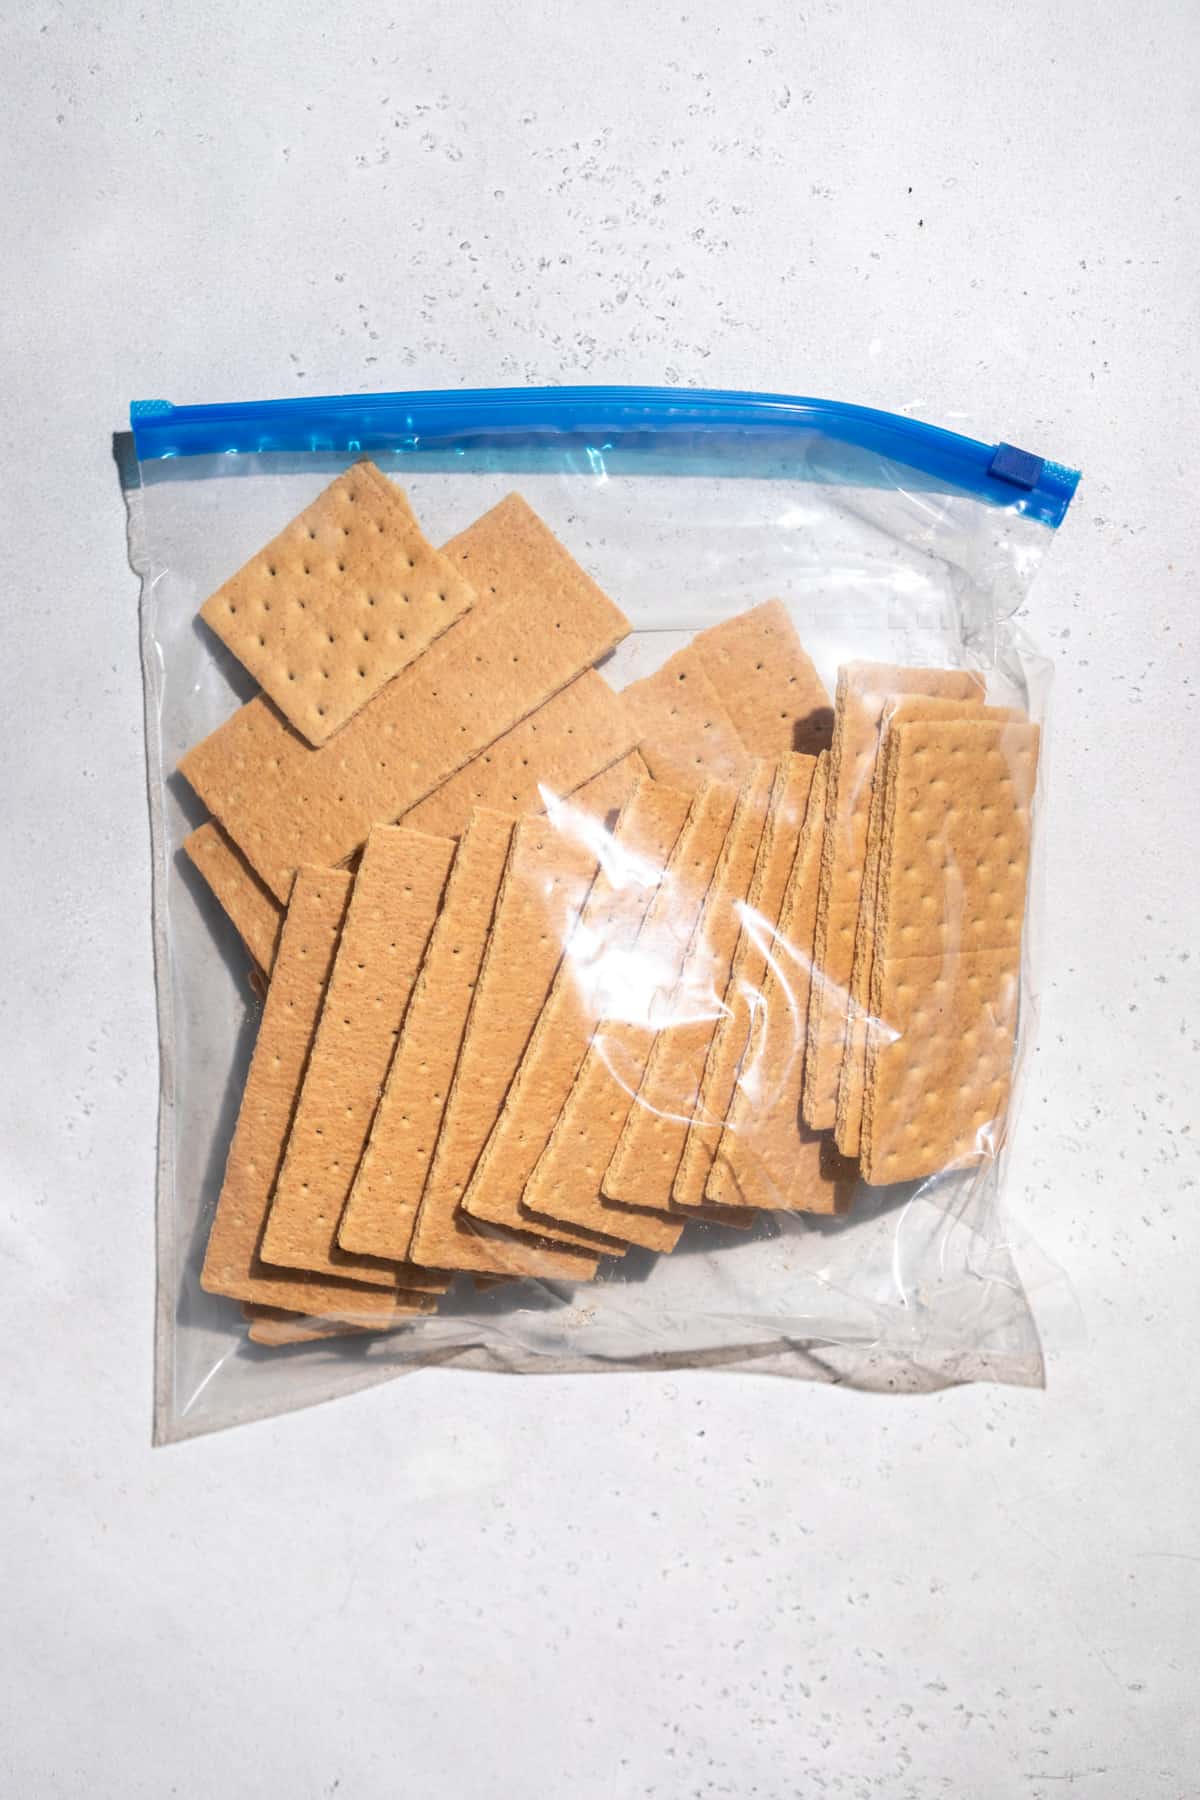 A plastic baggie of graham crackers.